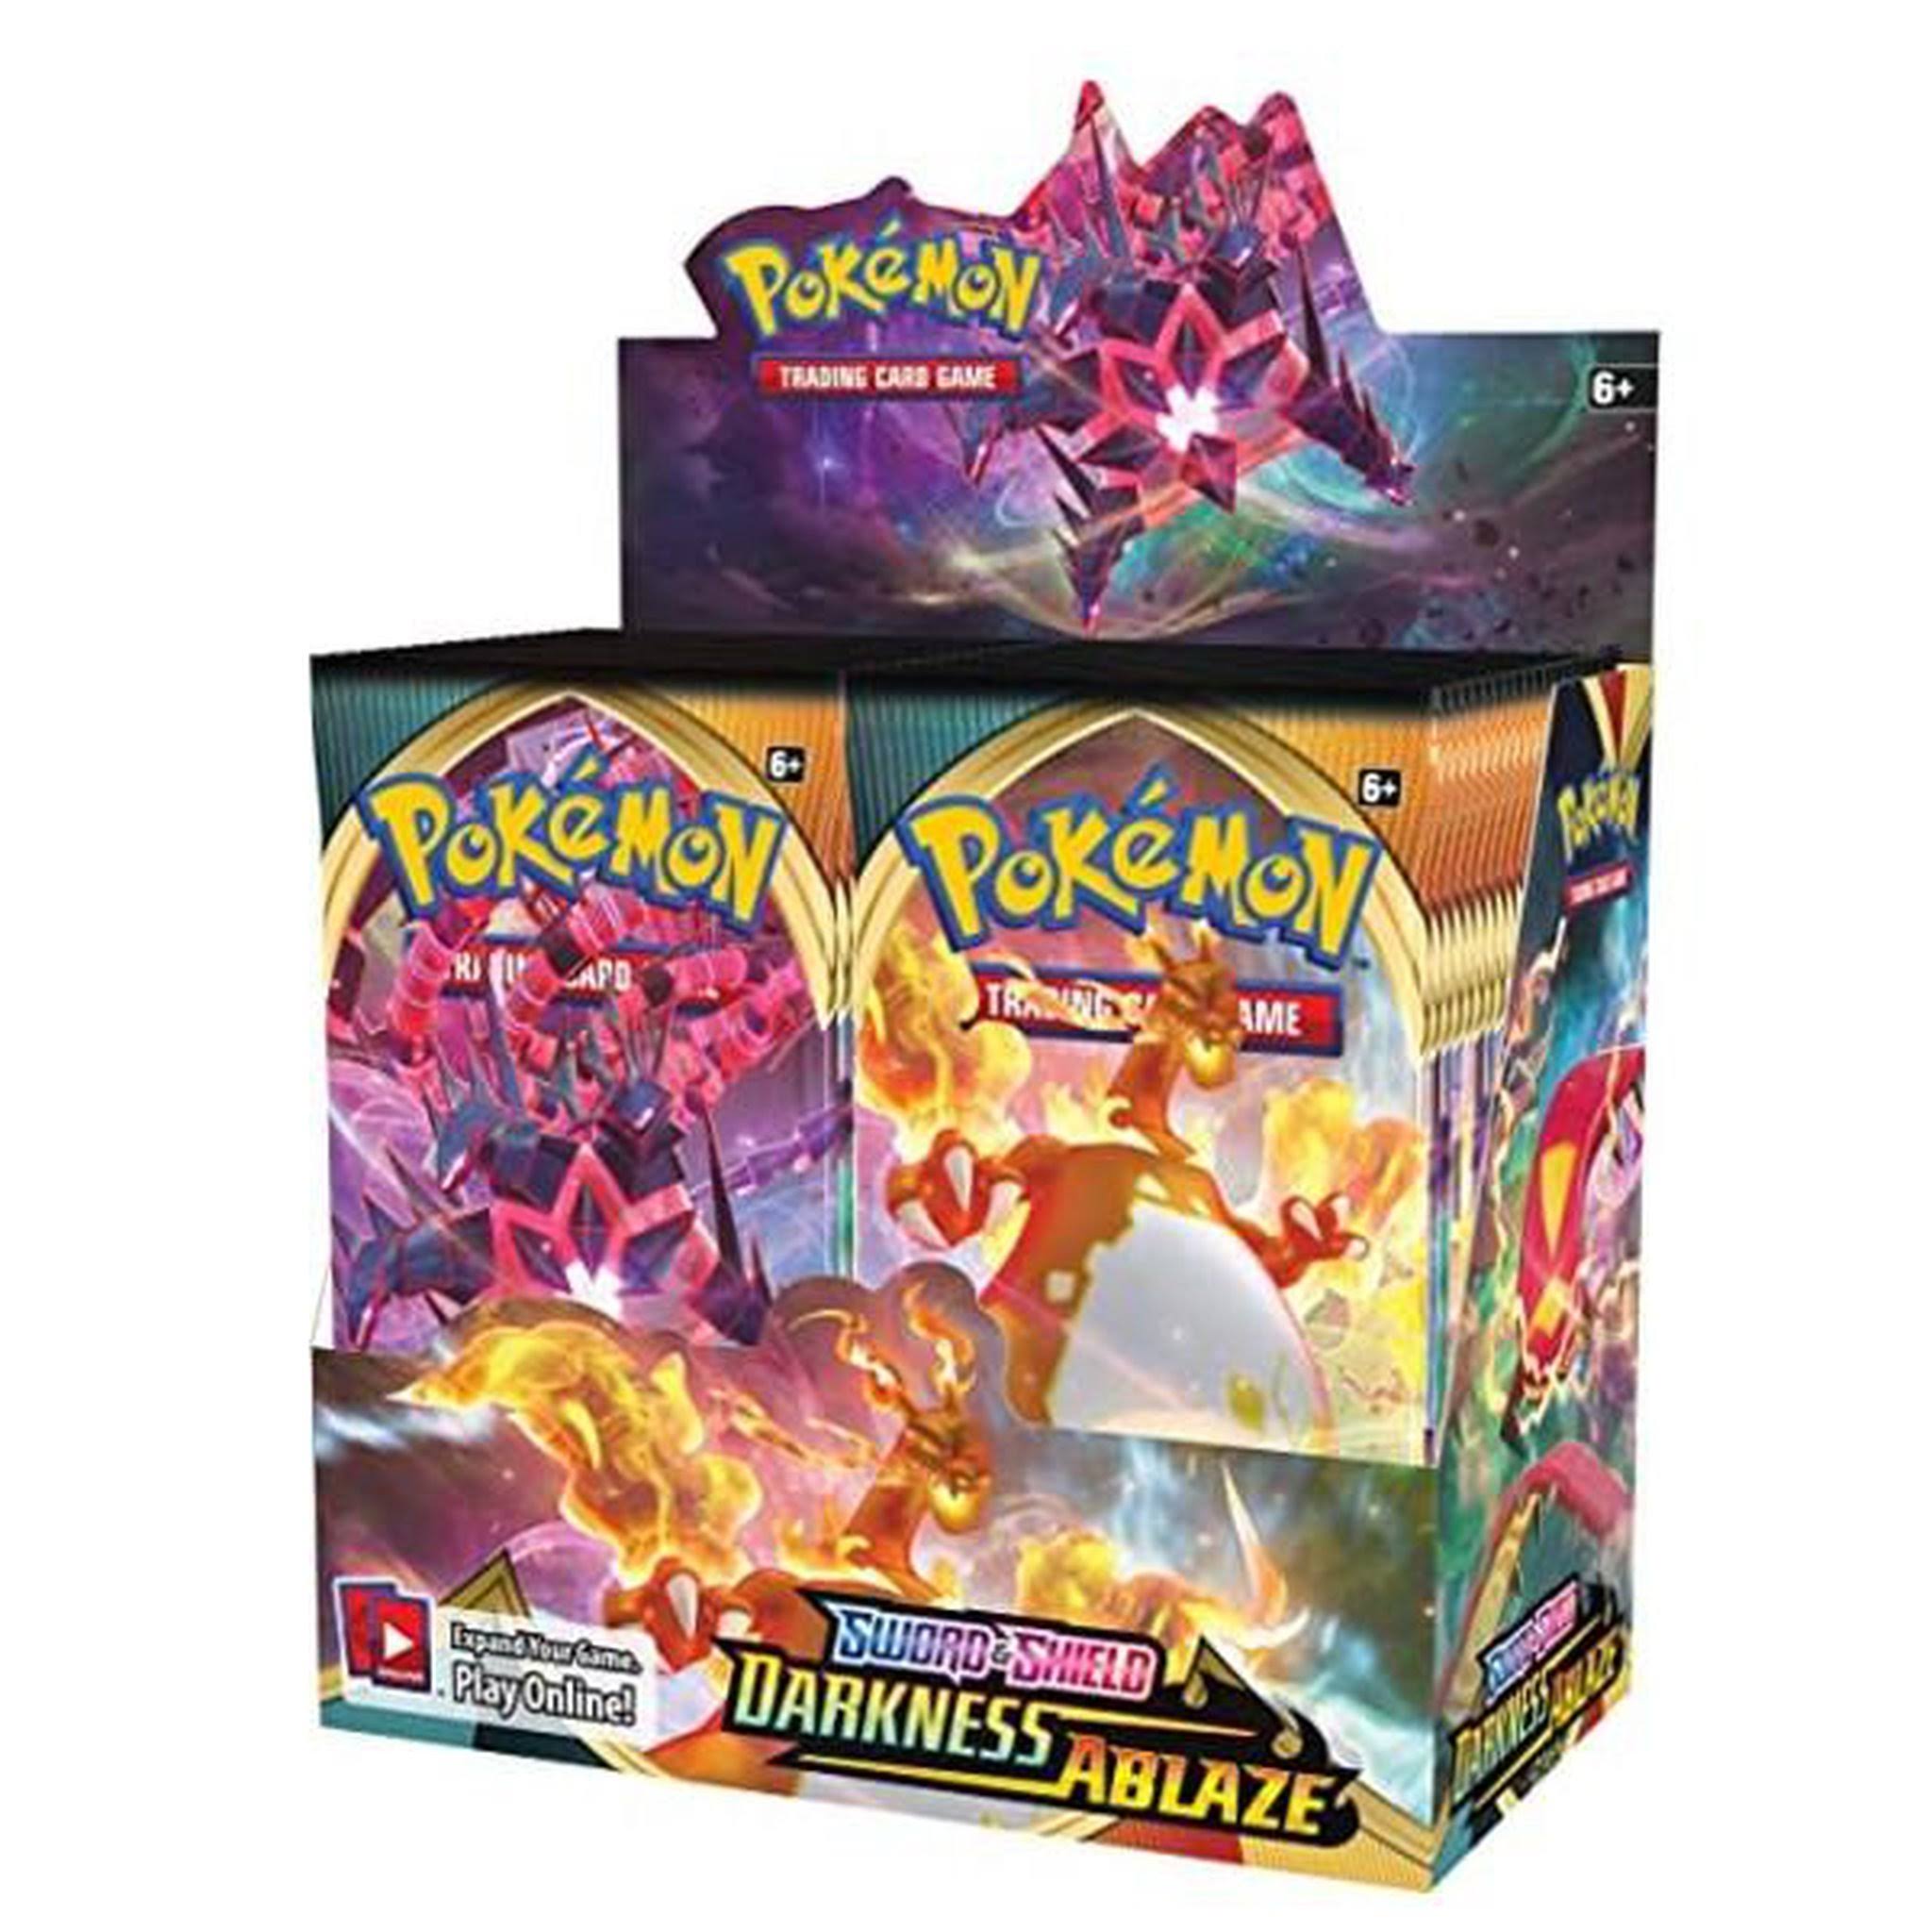 Pokemon - Sword & Shield Darkness Ablaze - Booster Box